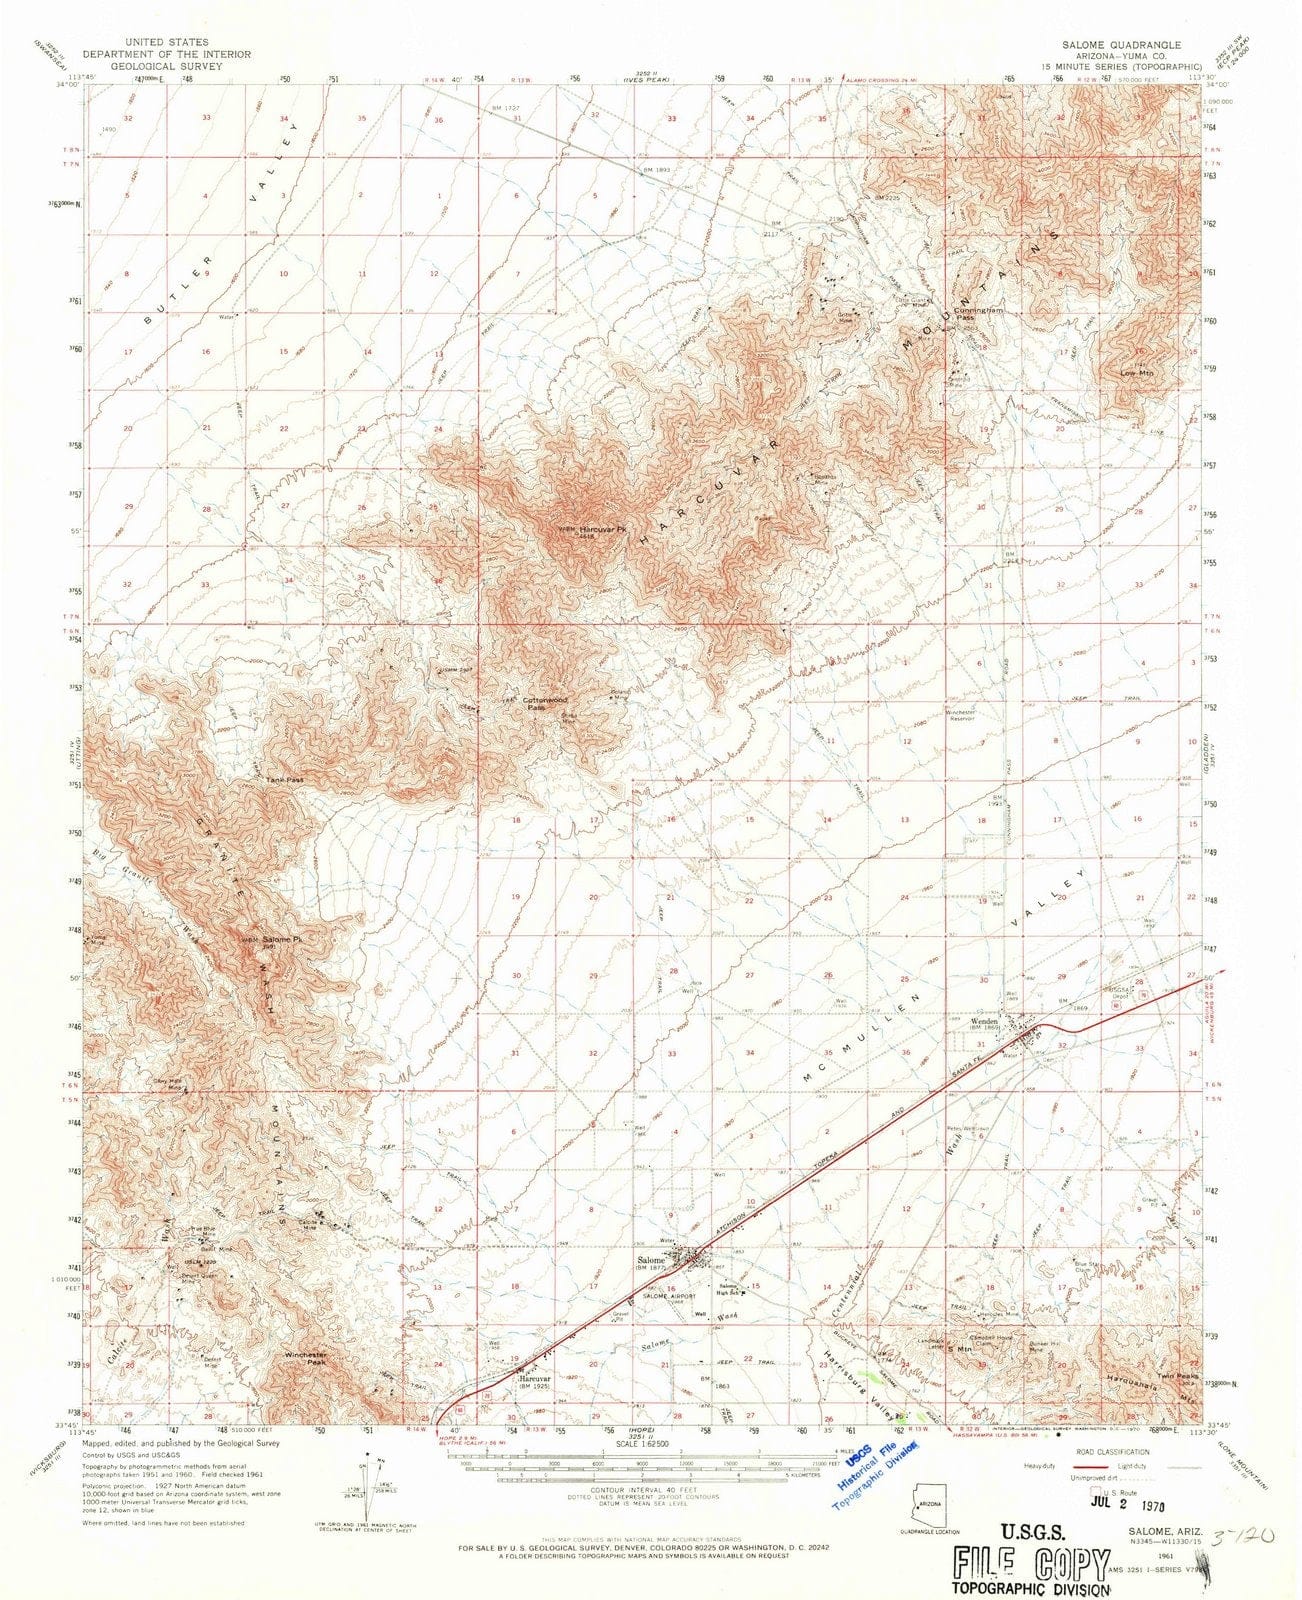 1961 Salome, AZ - Arizona - USGS Topographic Map